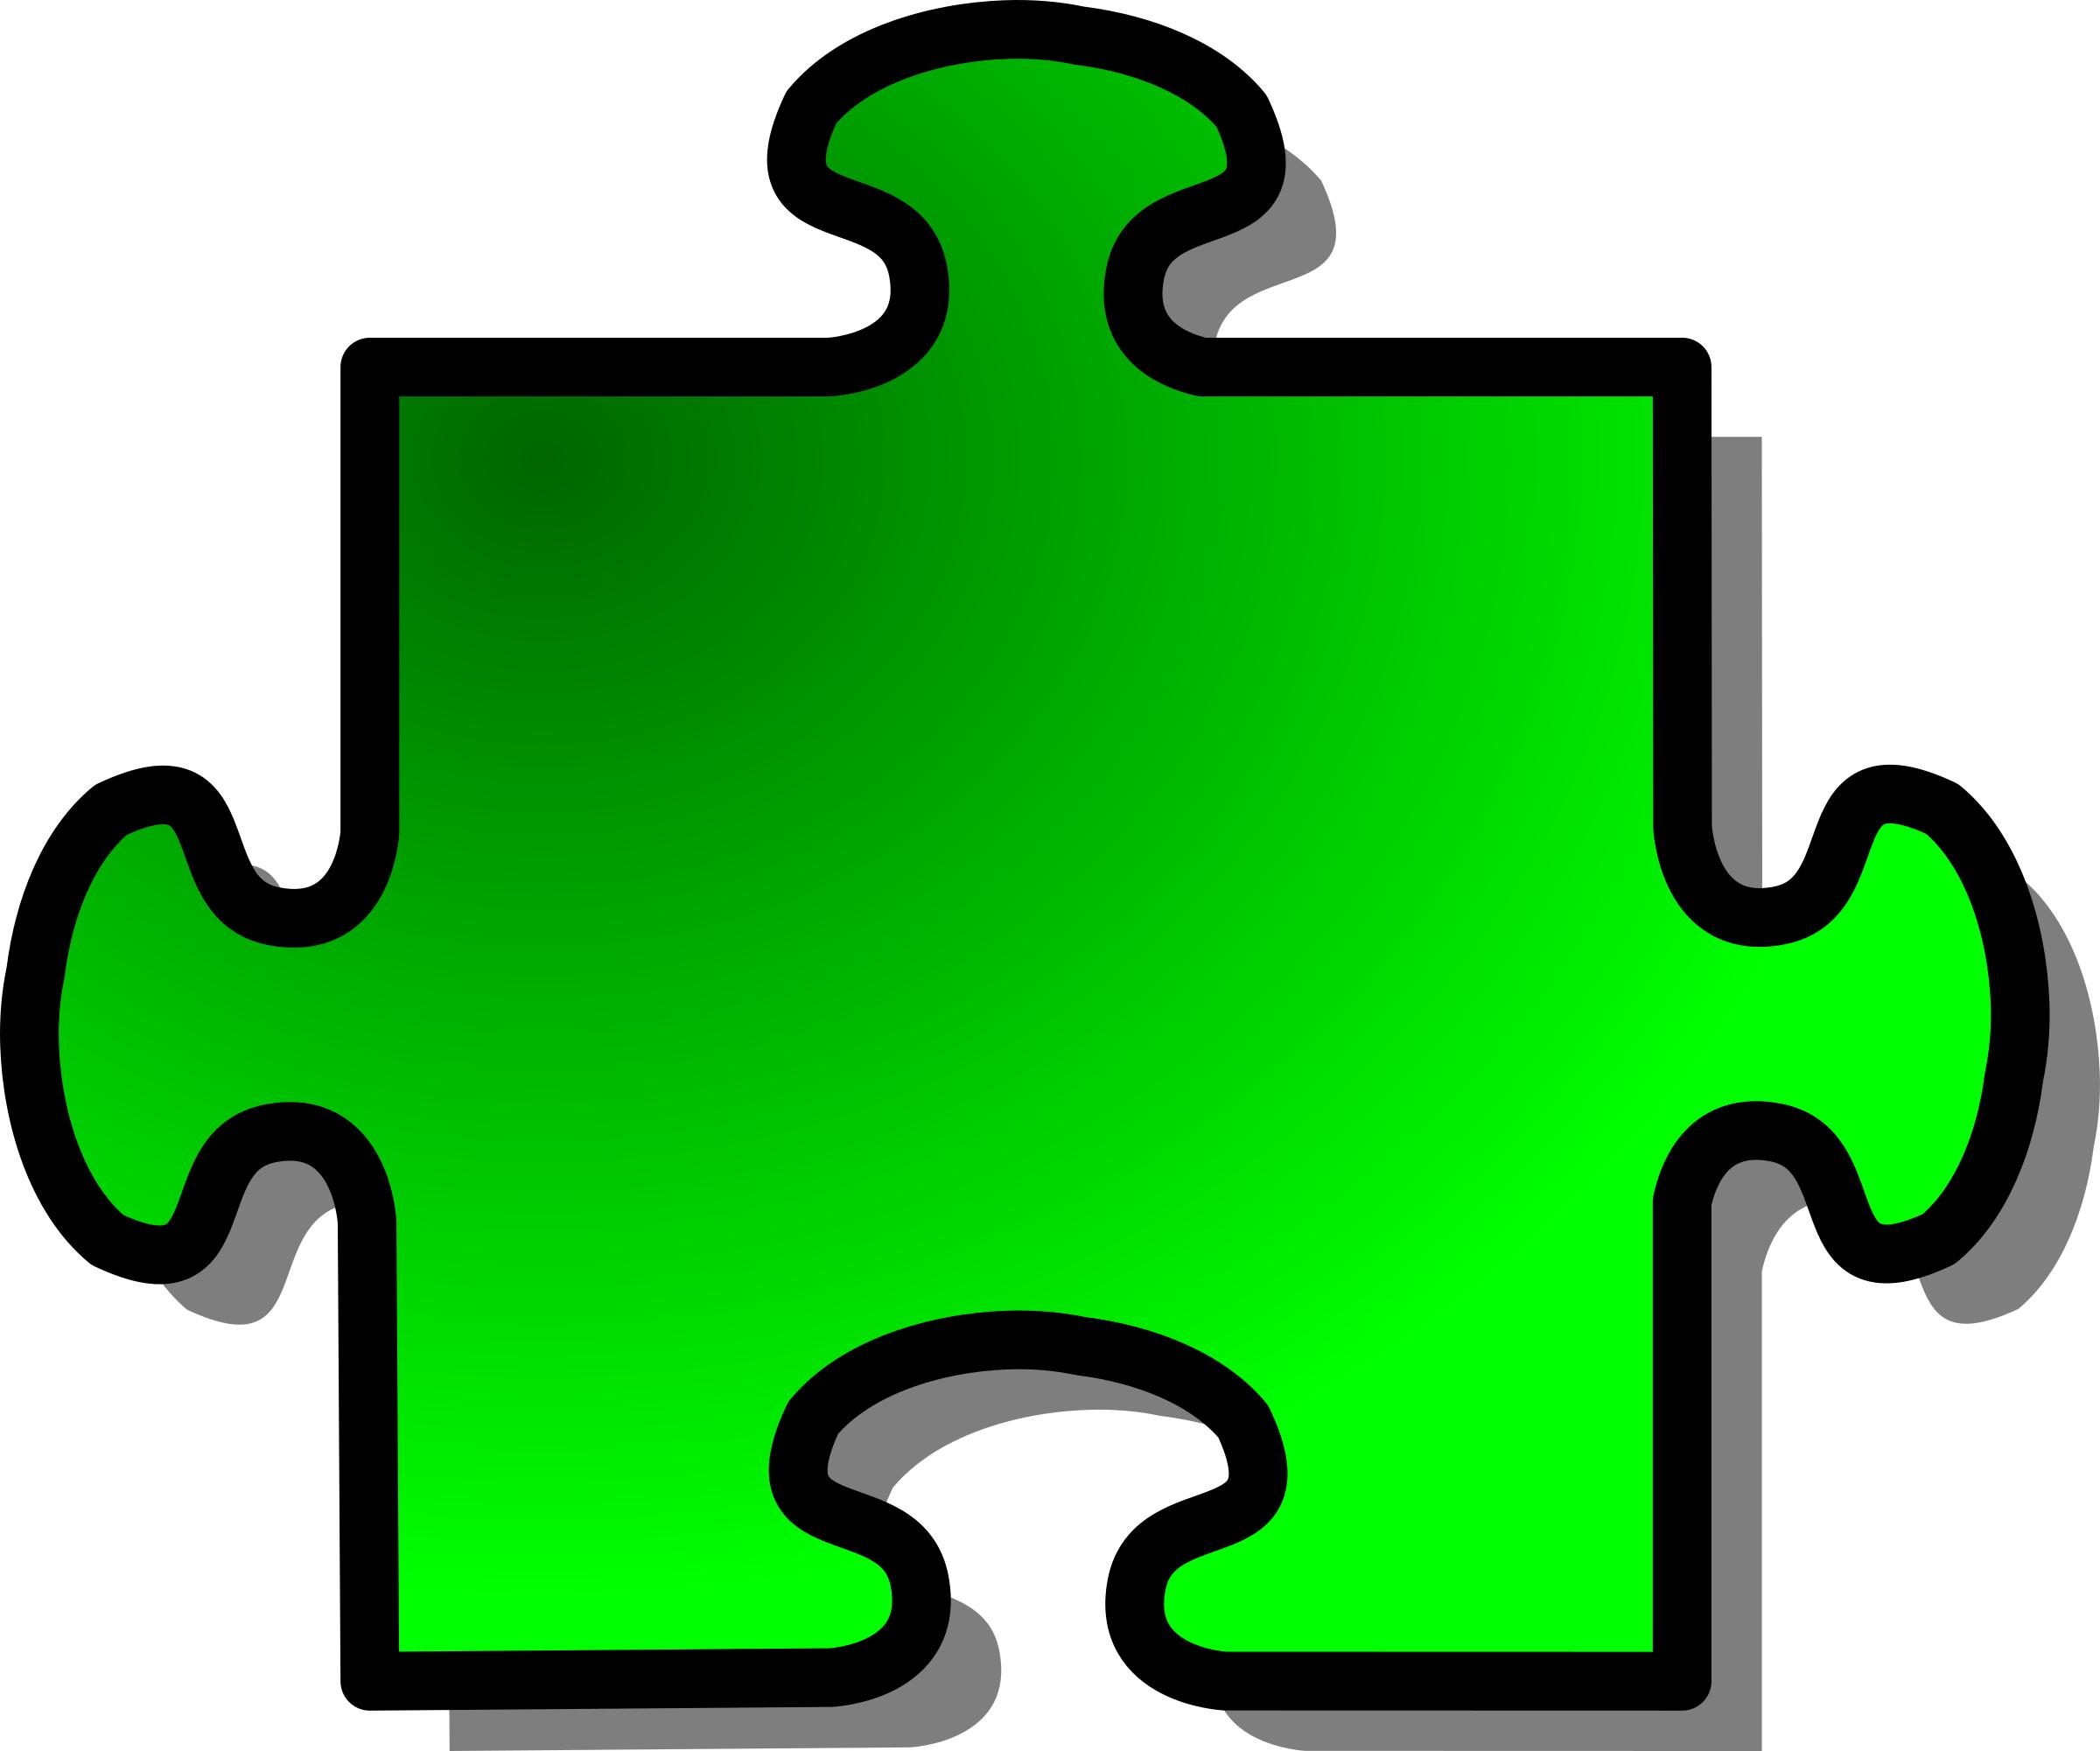 Green Jigsaw piece icons